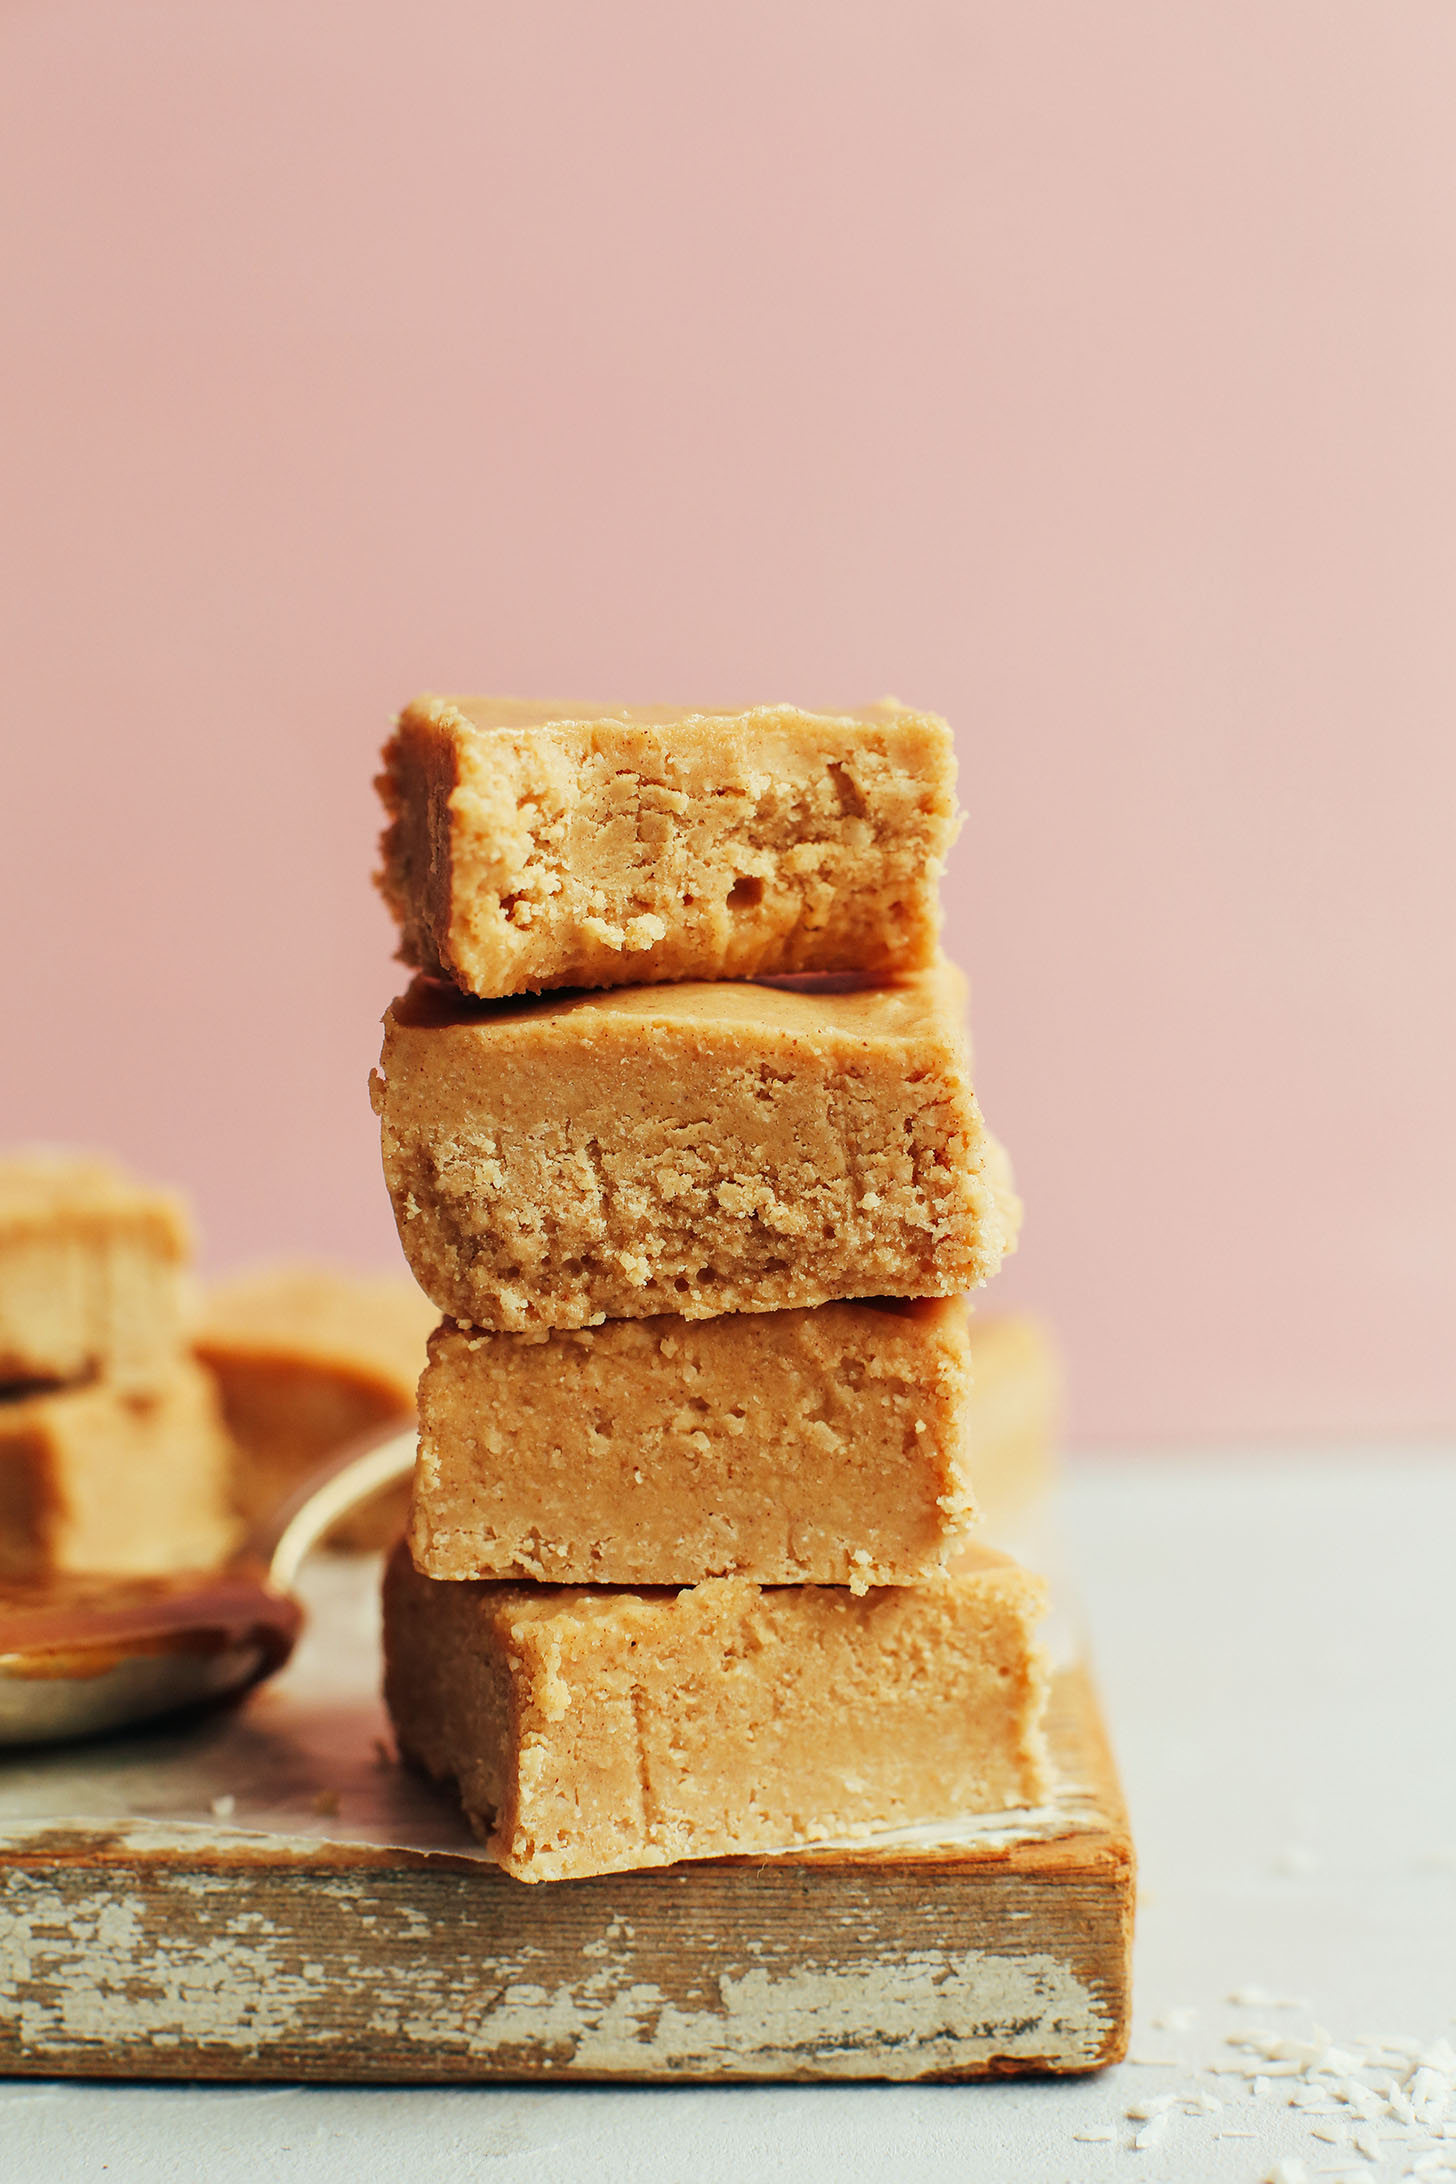 Stacked 4-Ingredient Peanut Butter Fudge for a delicious gluten-free vegan dessert